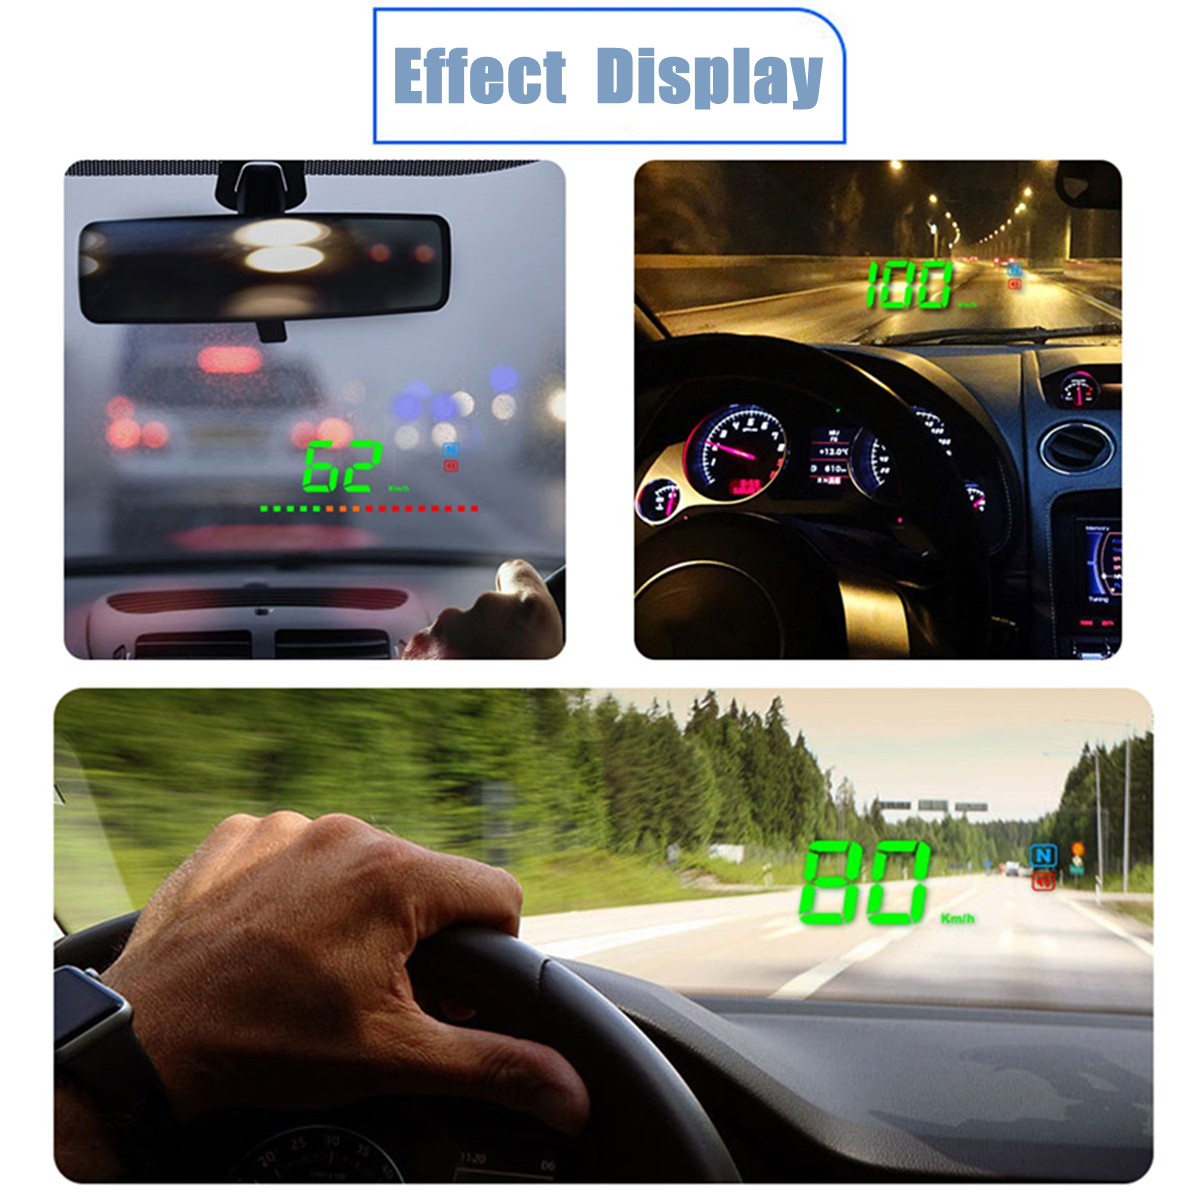 Universal-GPS-HUD-Digital-Head-Up-Display-Car-Truck-Speedometer-Speed-Warning-1330485